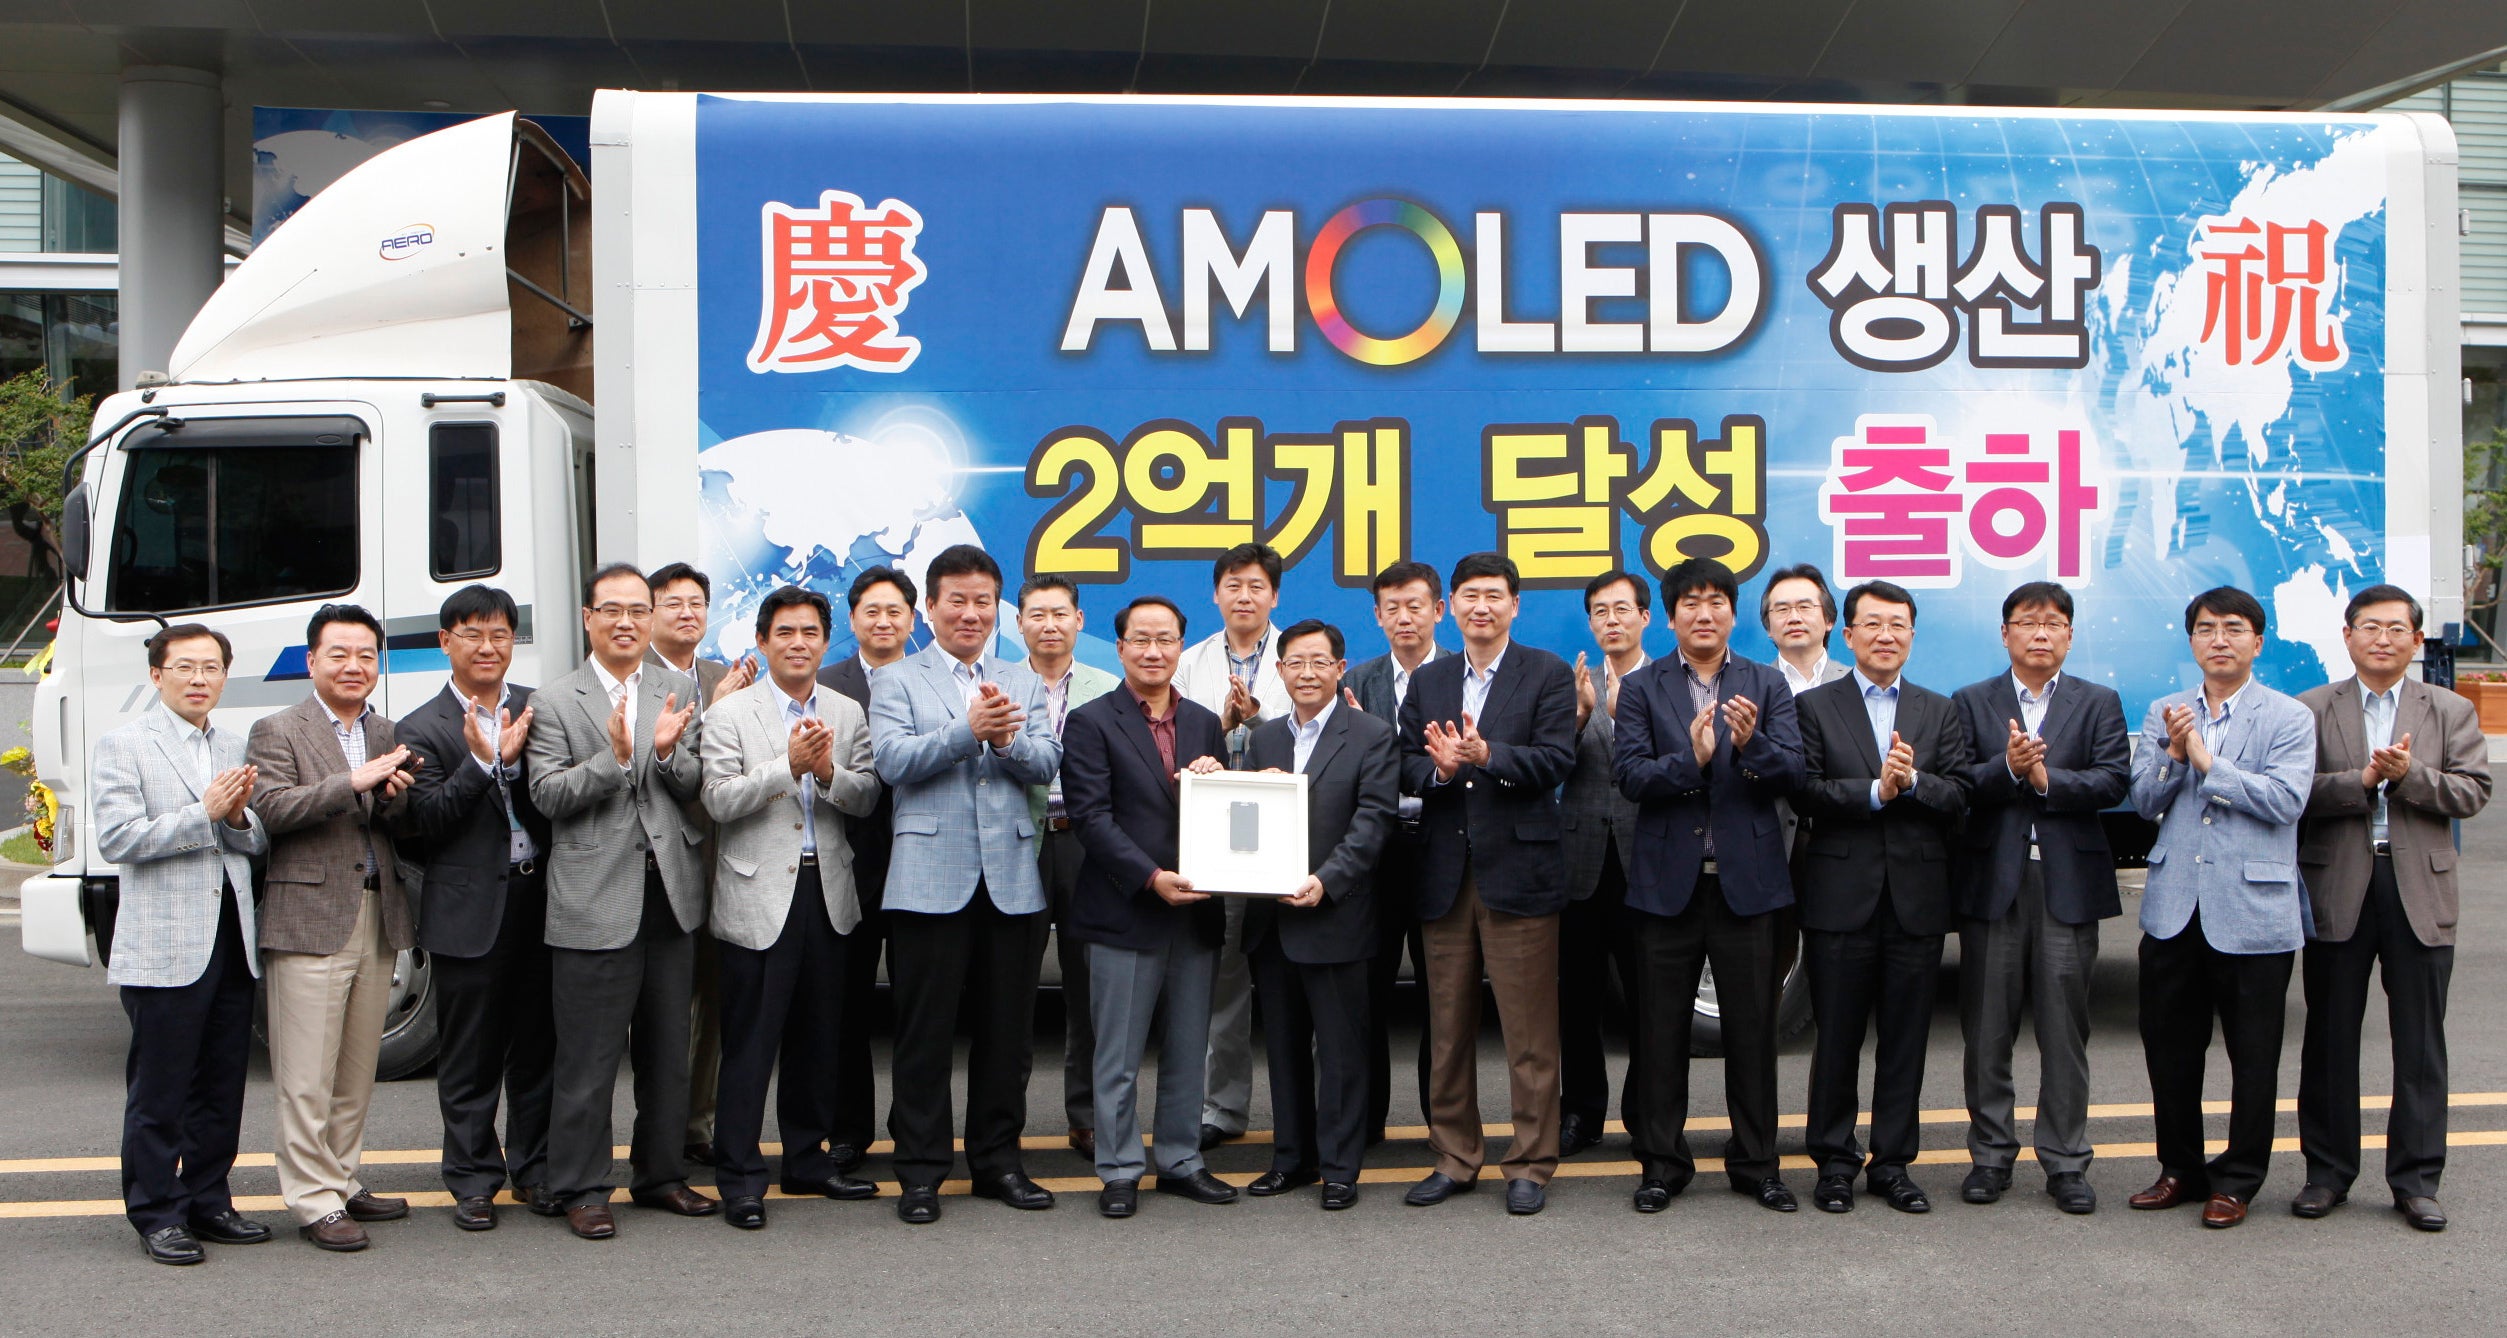 Samsung has made 200 million AMOLED panels